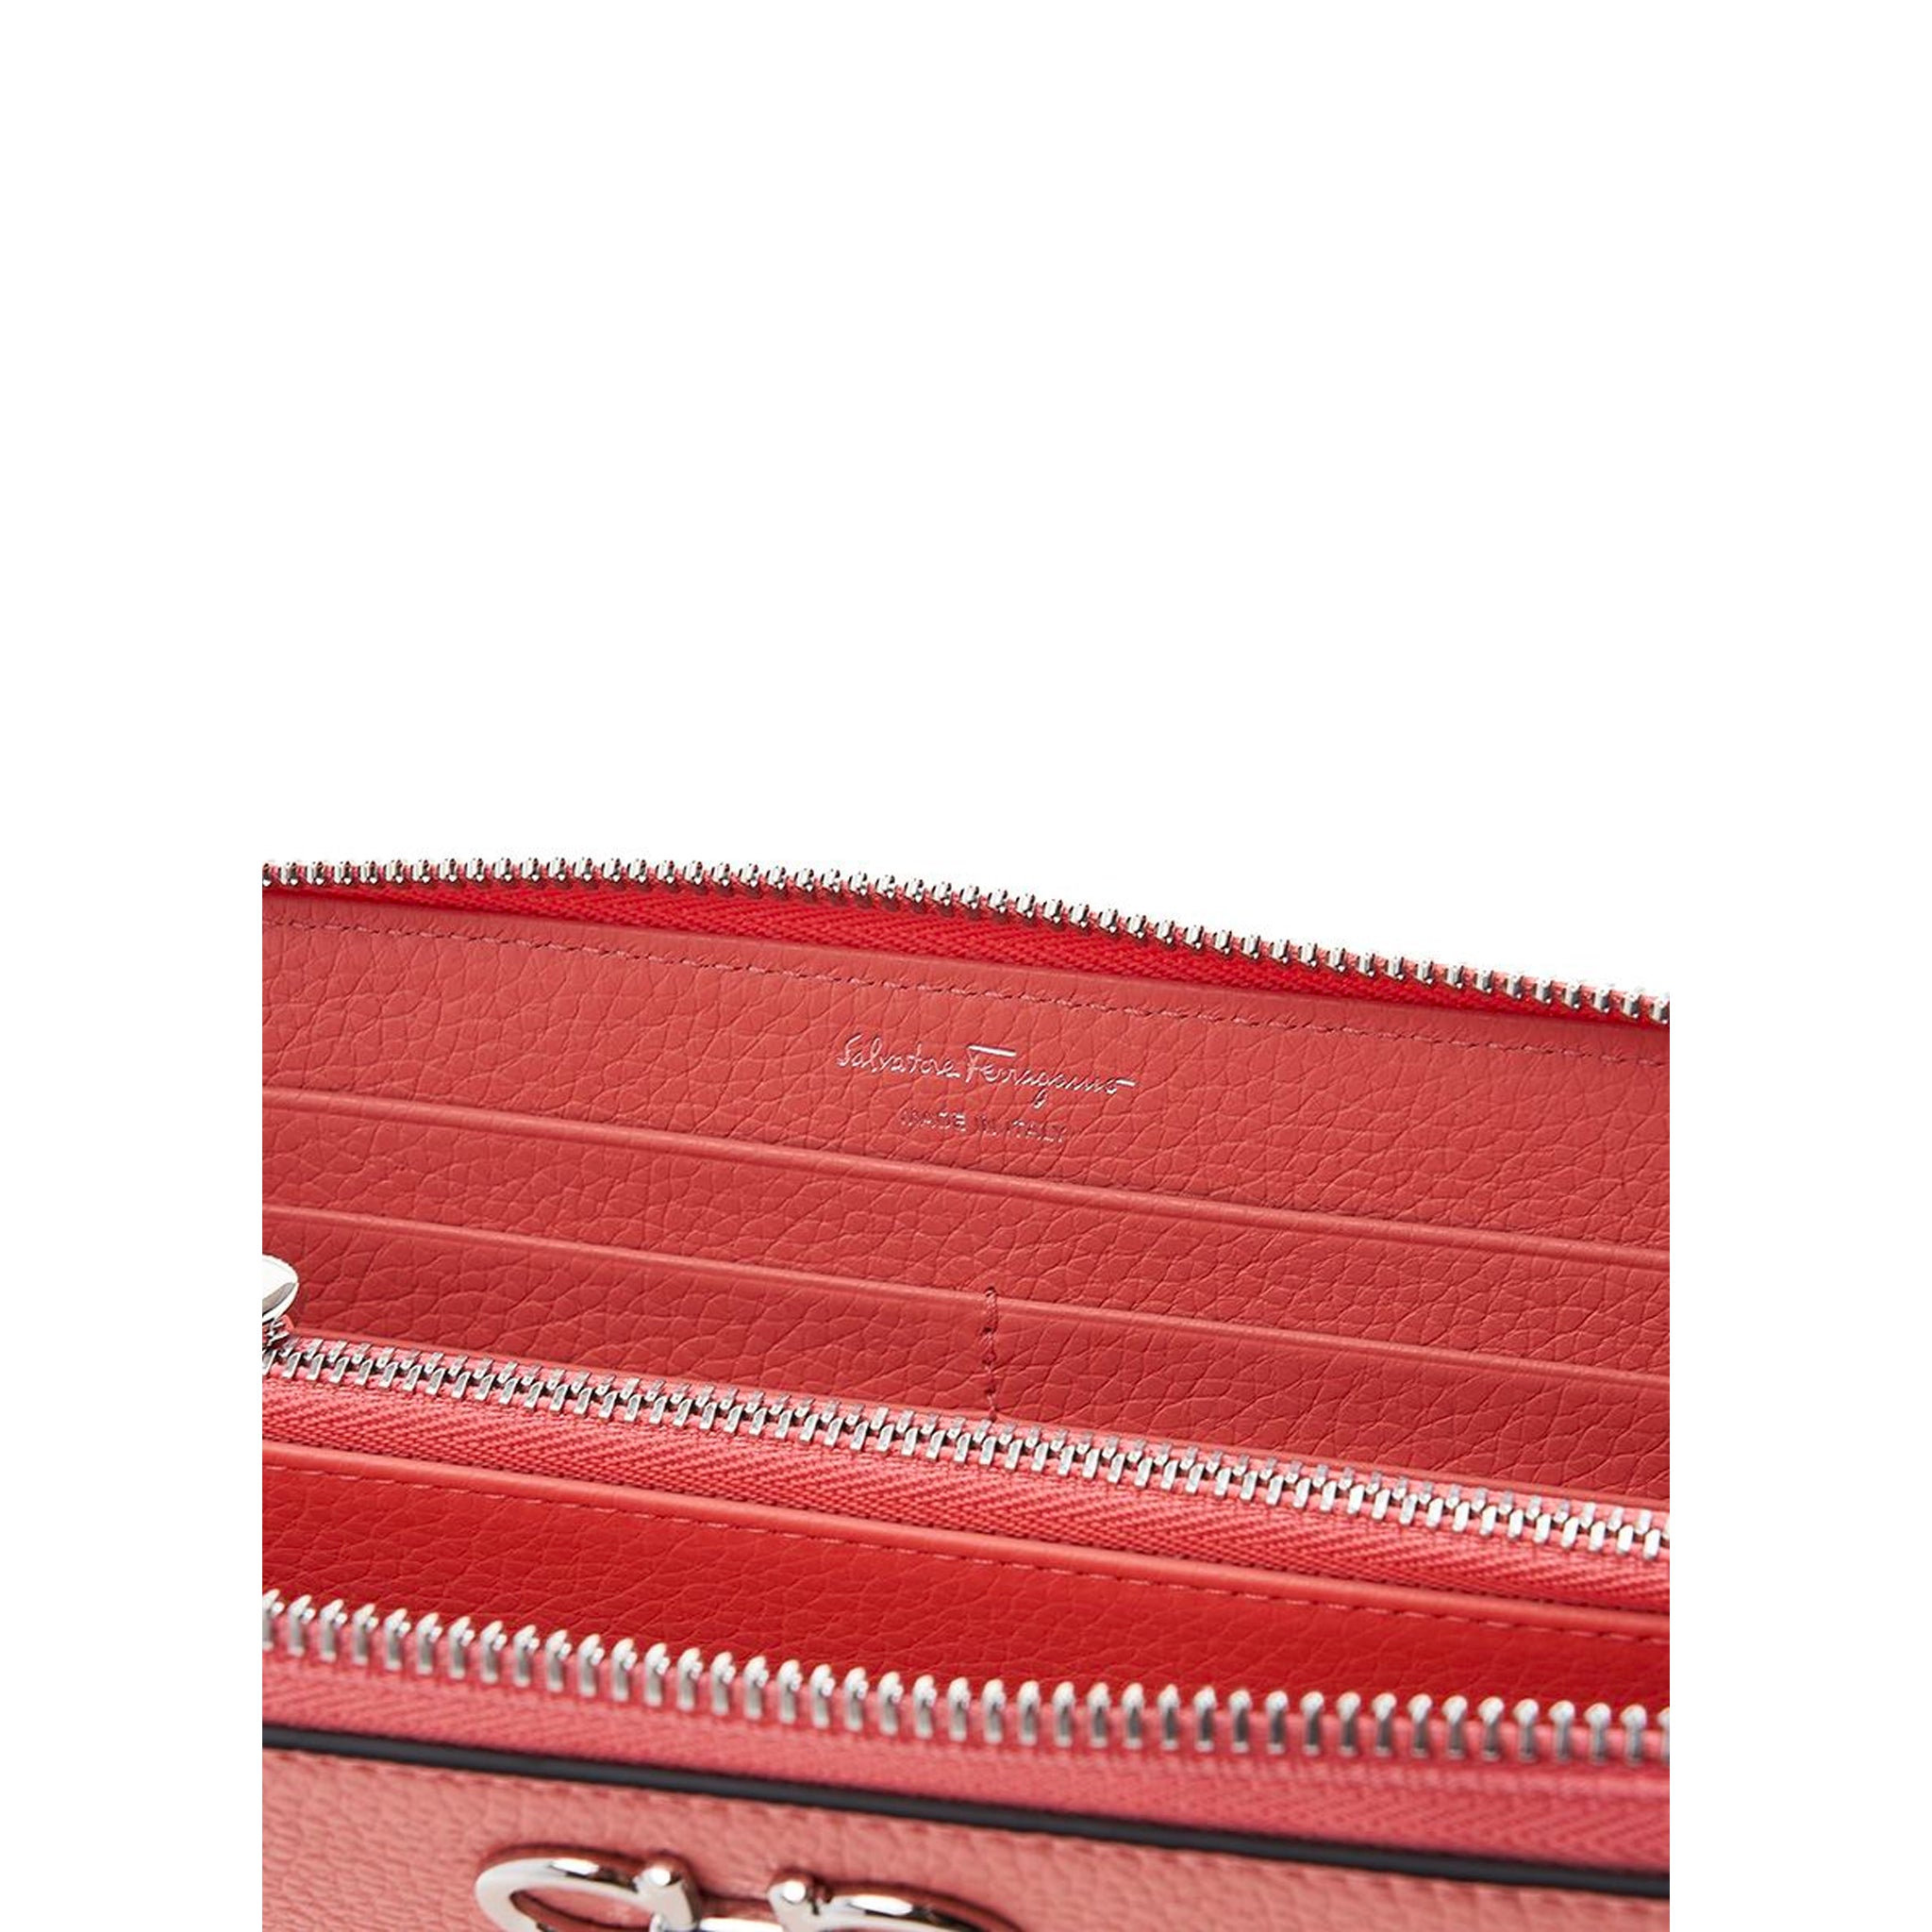 Salvatore Ferragamo Logo Leather Wallet